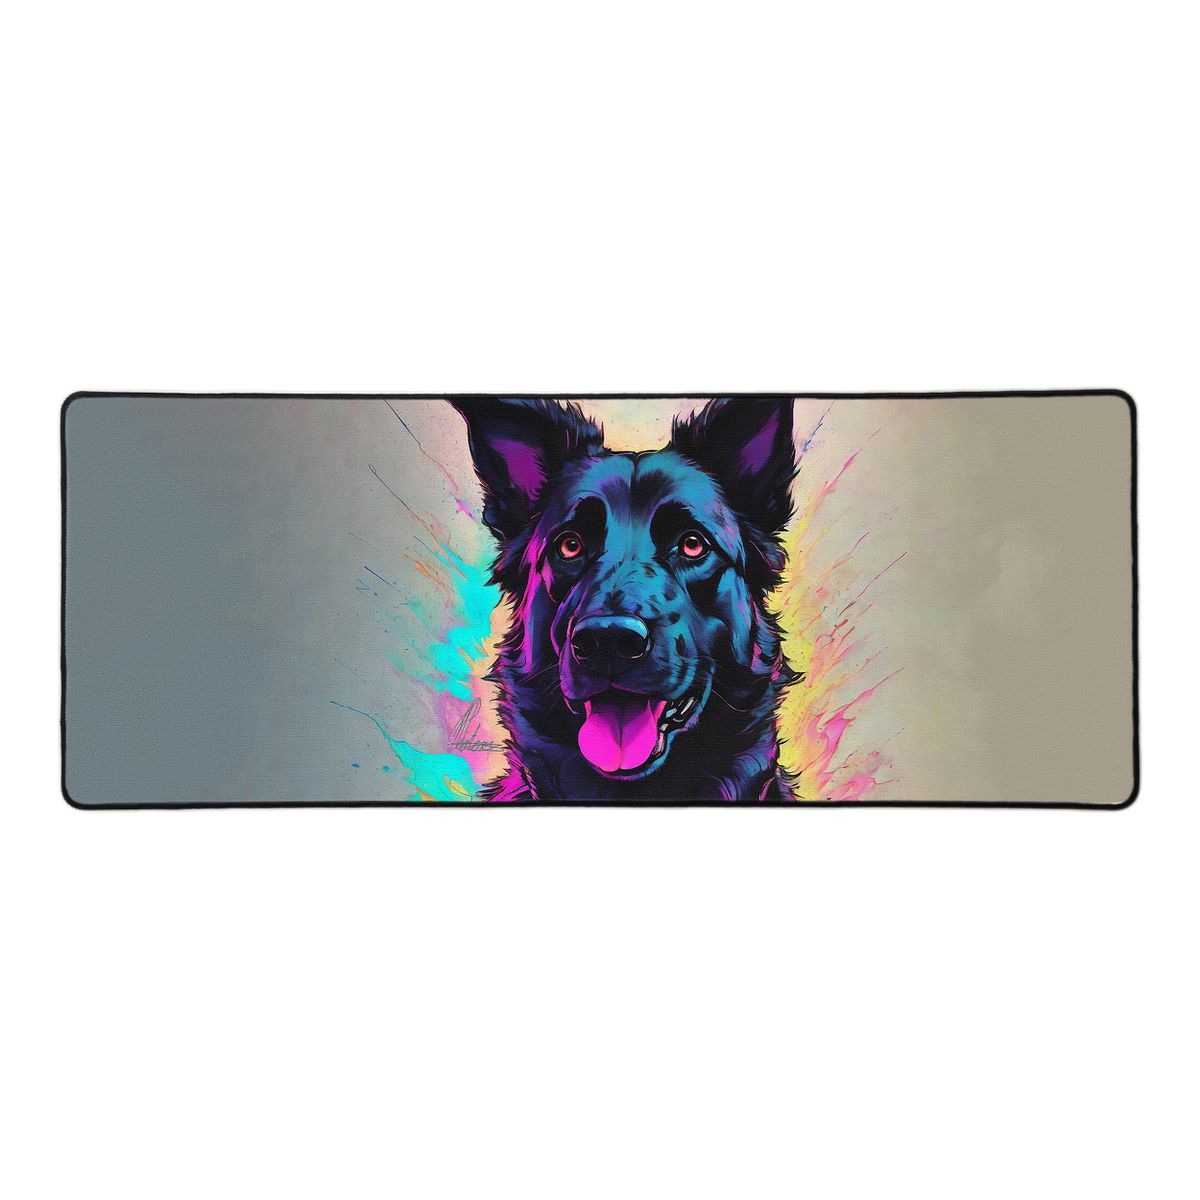 Neon Splash Dog By Nathan Pieterse Large Desk Pad